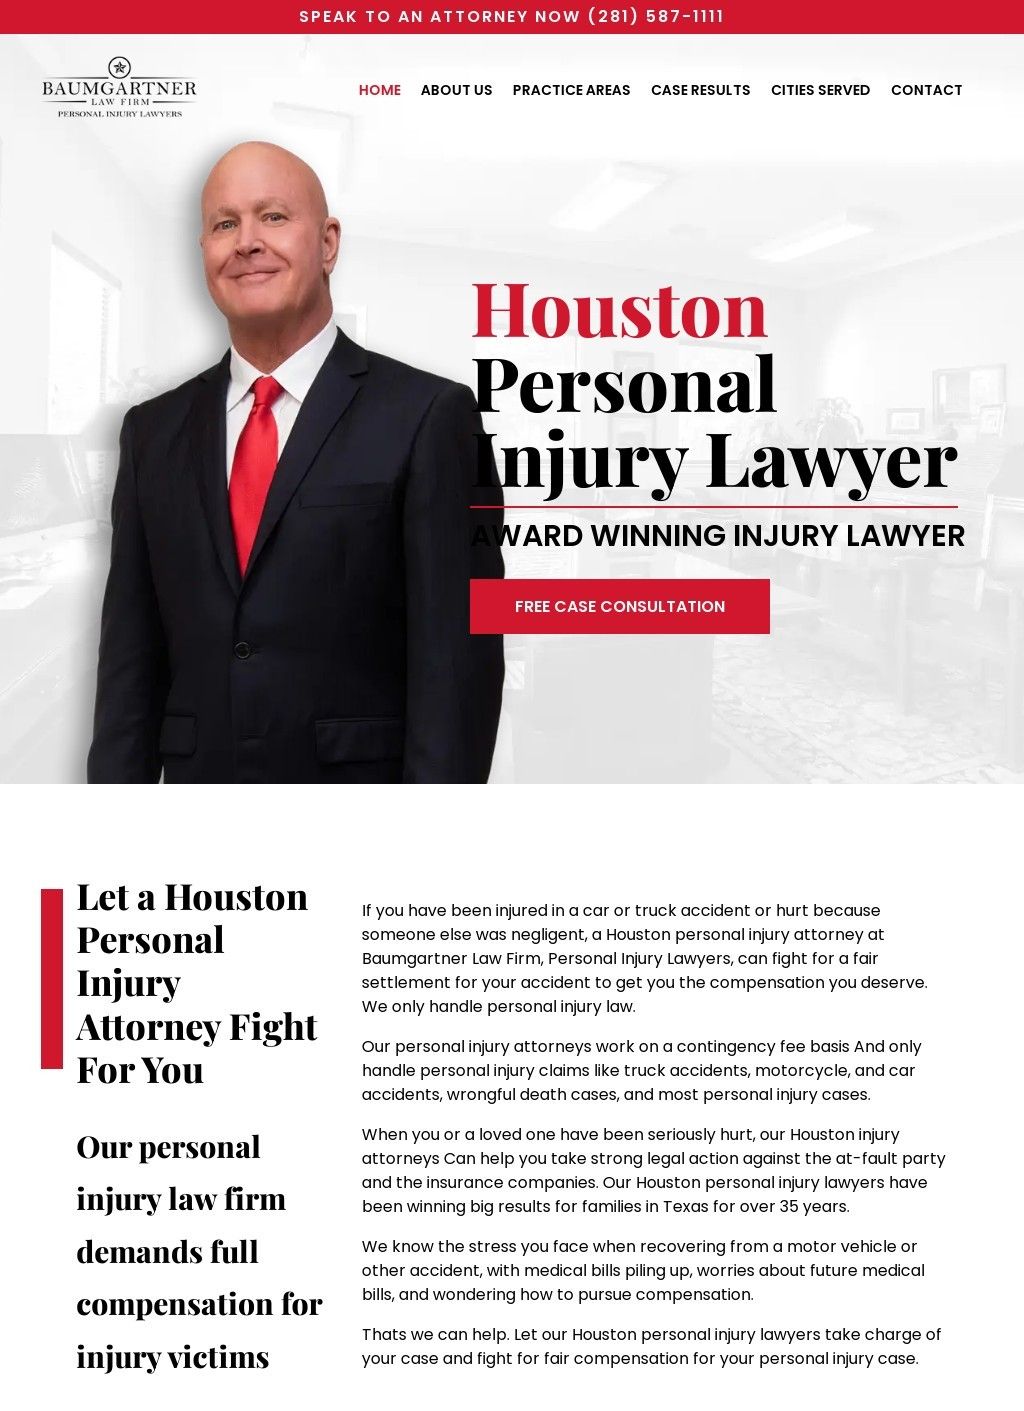 Baumgartner Law Firm Houston Personal Injury Lawyers